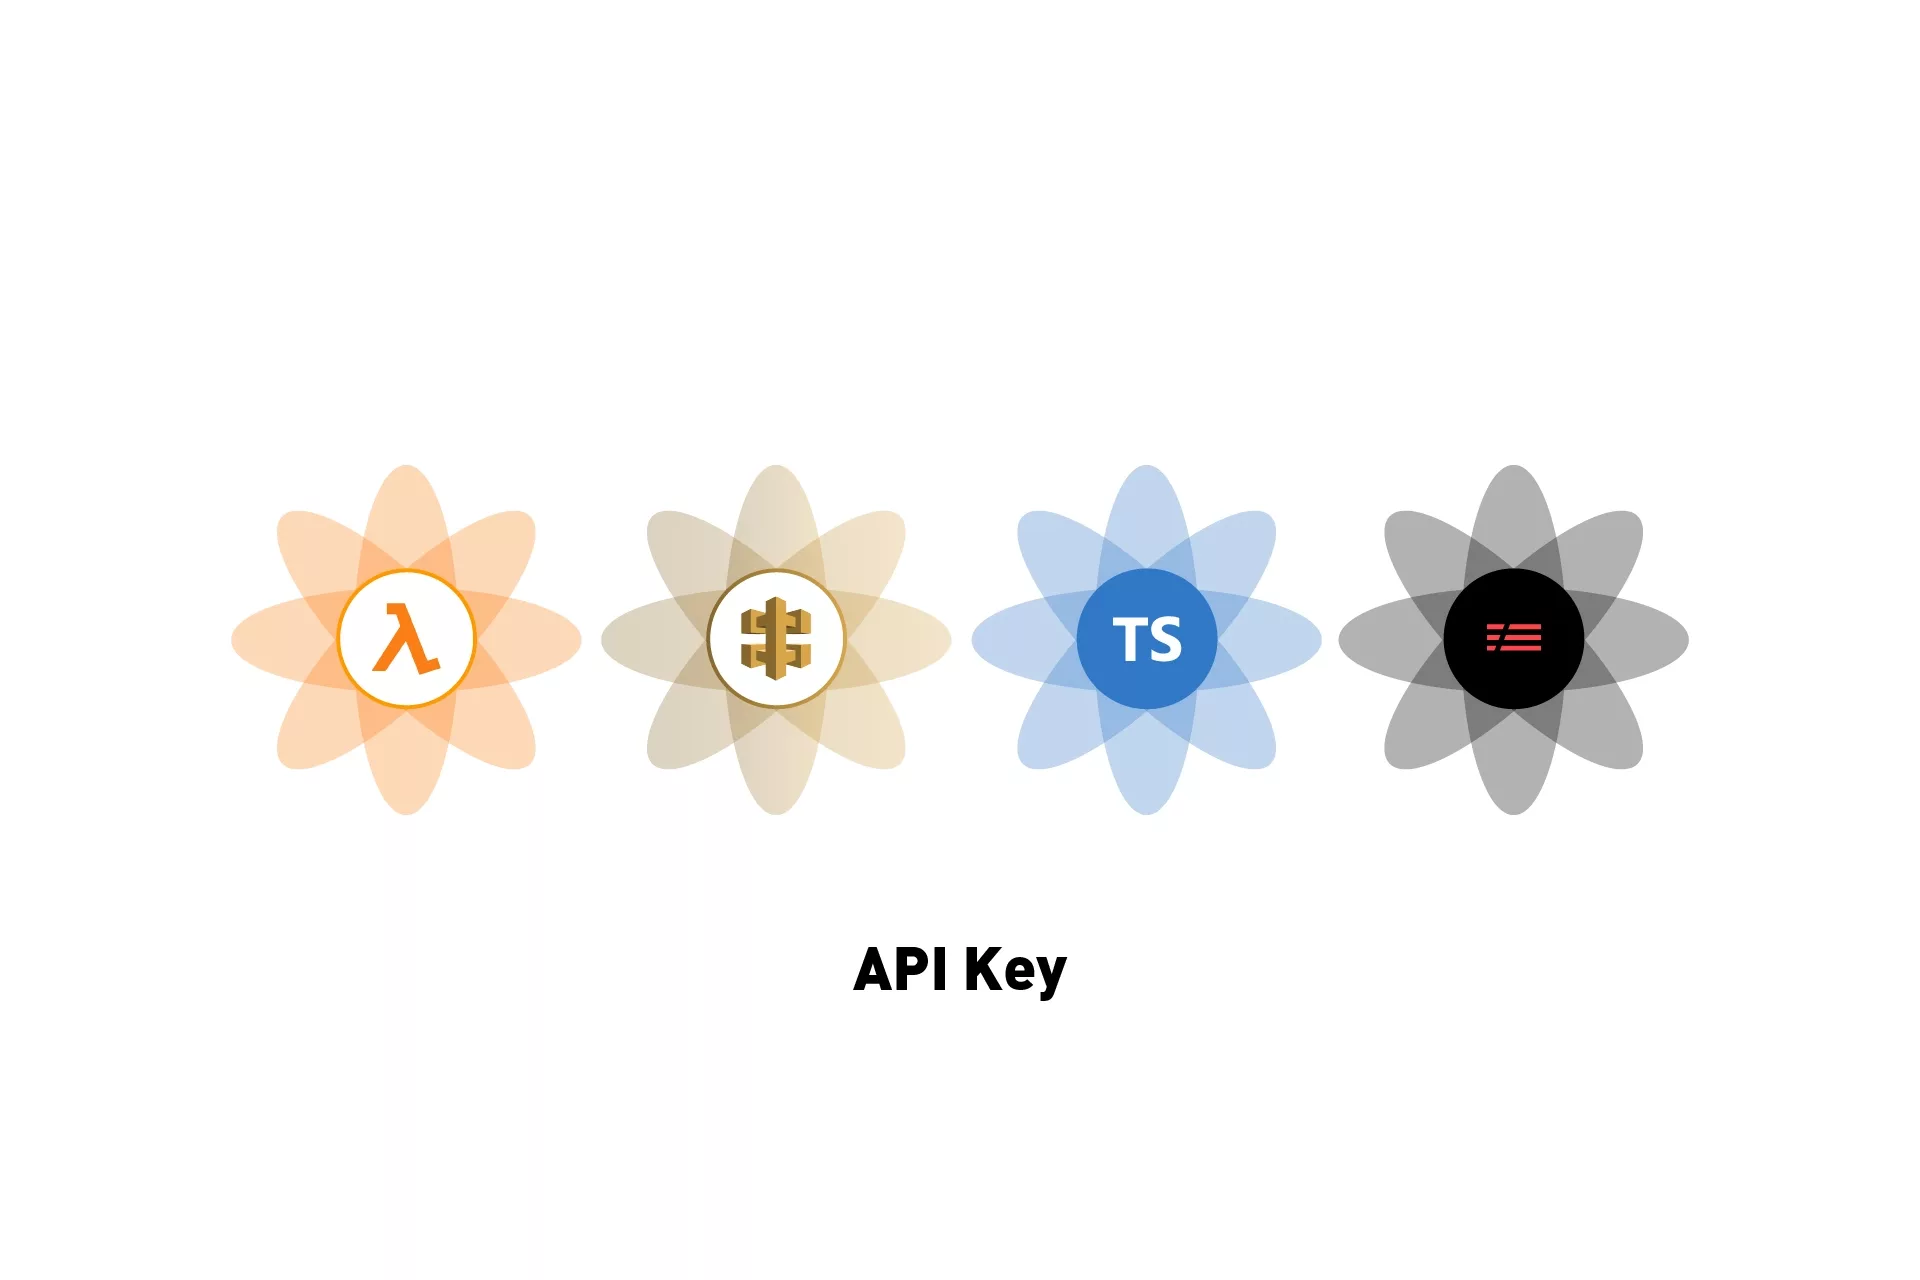 A set of flowers that represent AWS Lambda, AWS API Gateway, Typescript and Serverless. Below them sits the text "API key"